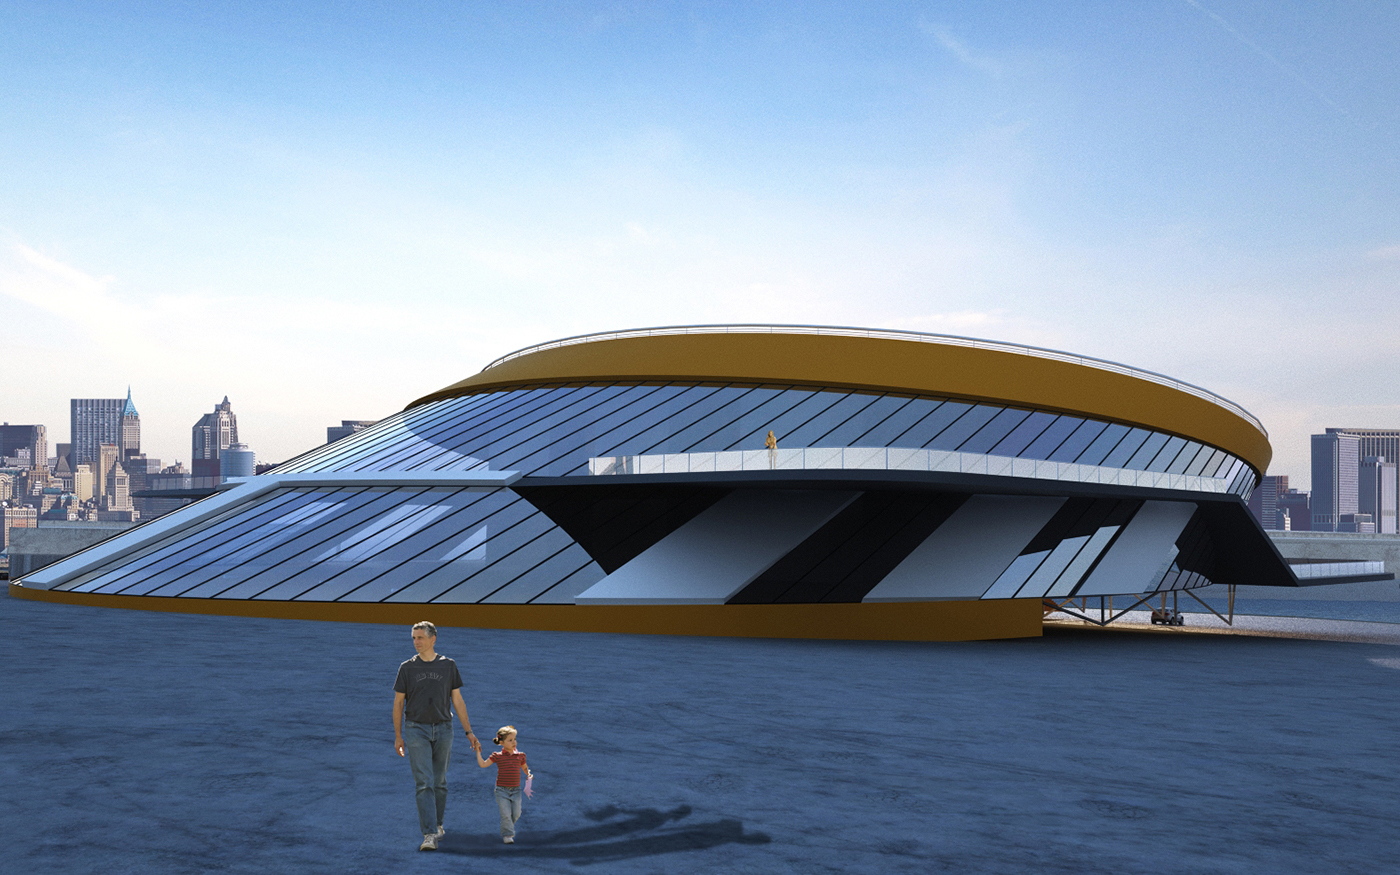 Cinema centre futuristic Energy saving vray Render 3dsmax ussenov Damir damirussenov ussenovdamir